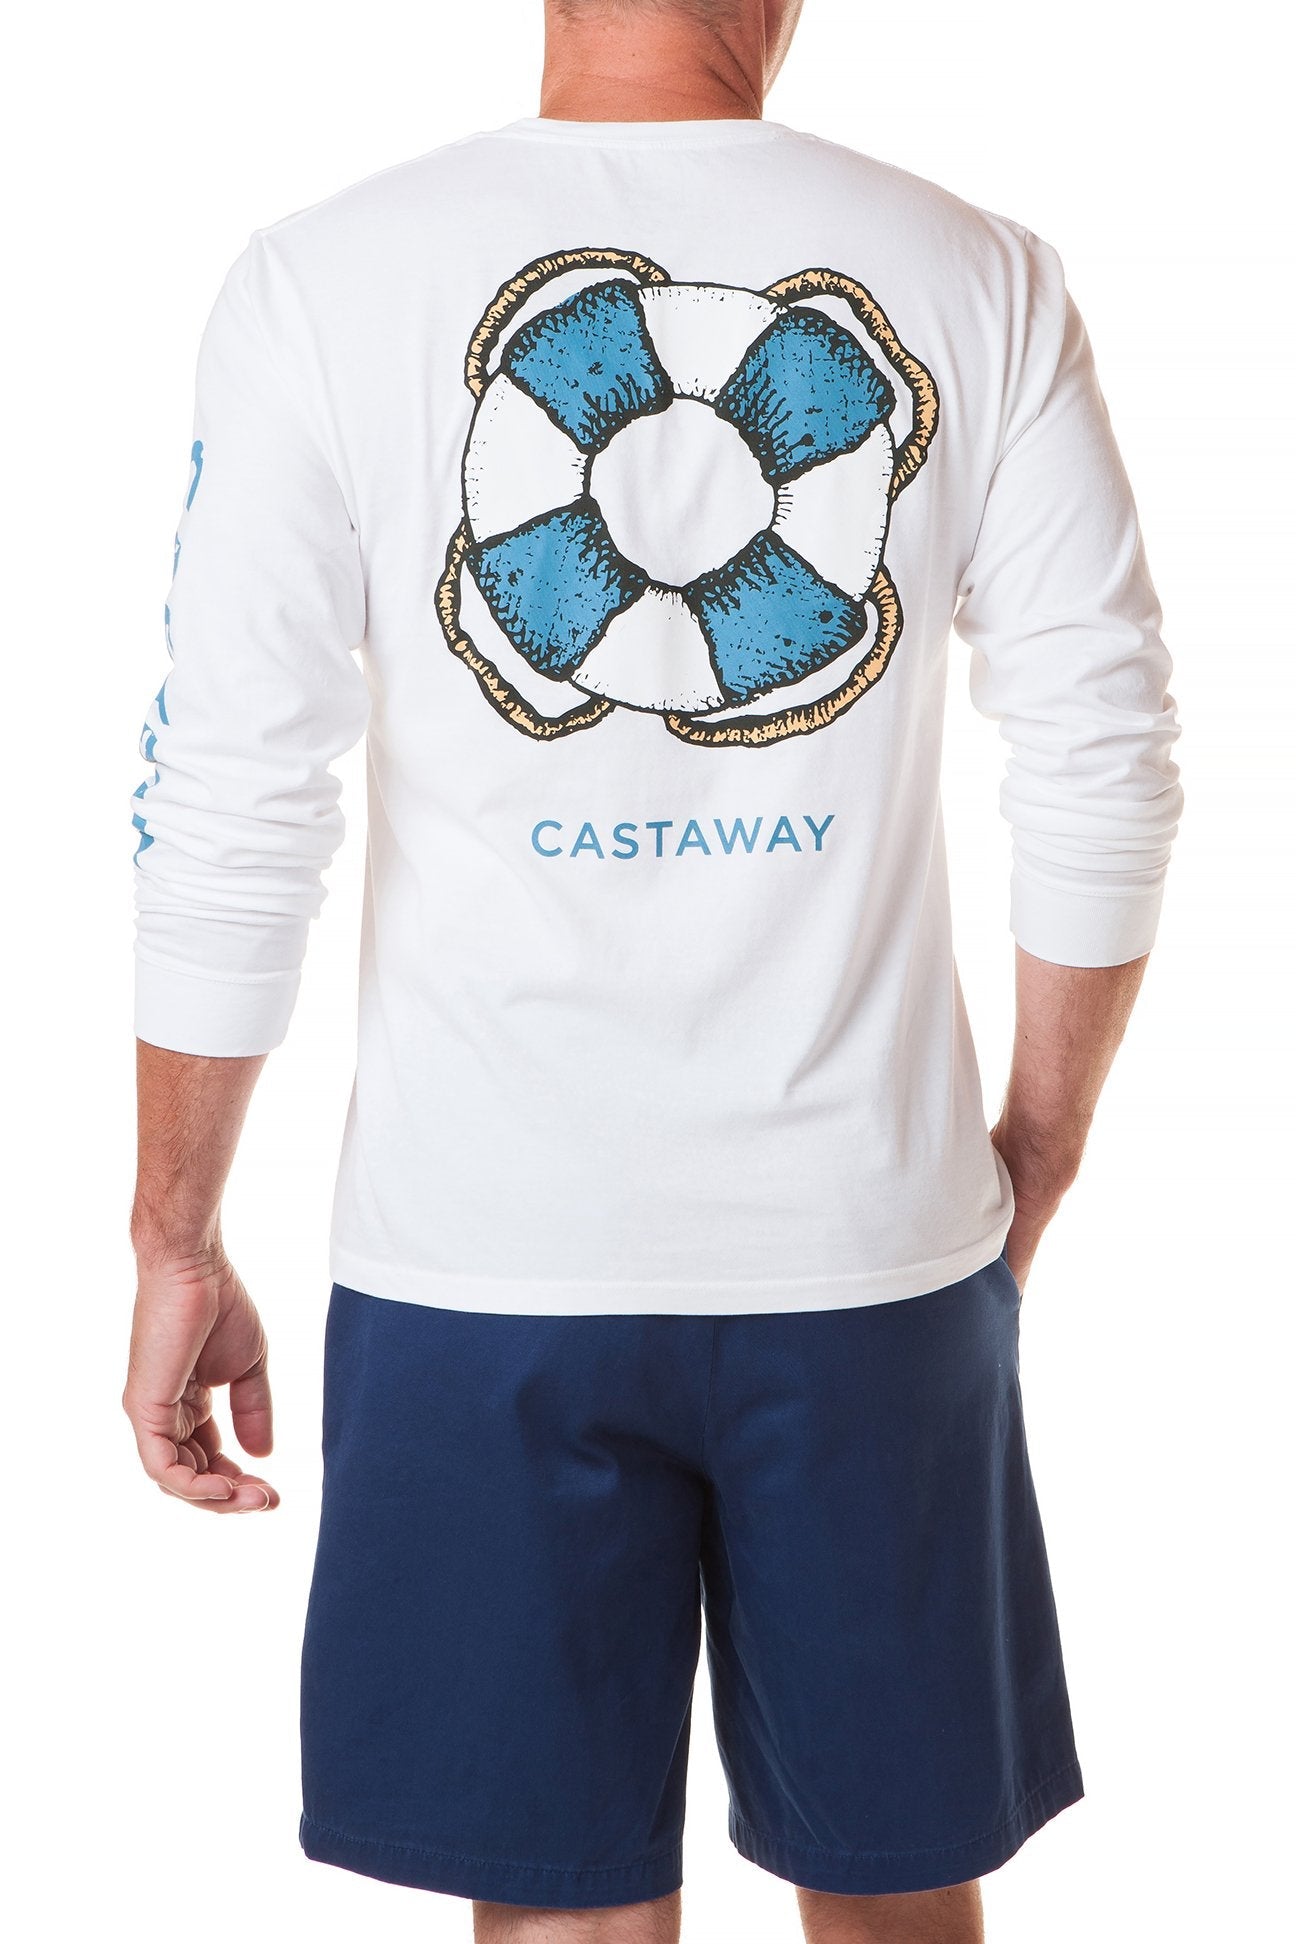 Castaway Mens Long Sleeve Tee White Shirt – Nantucket Island Castaway